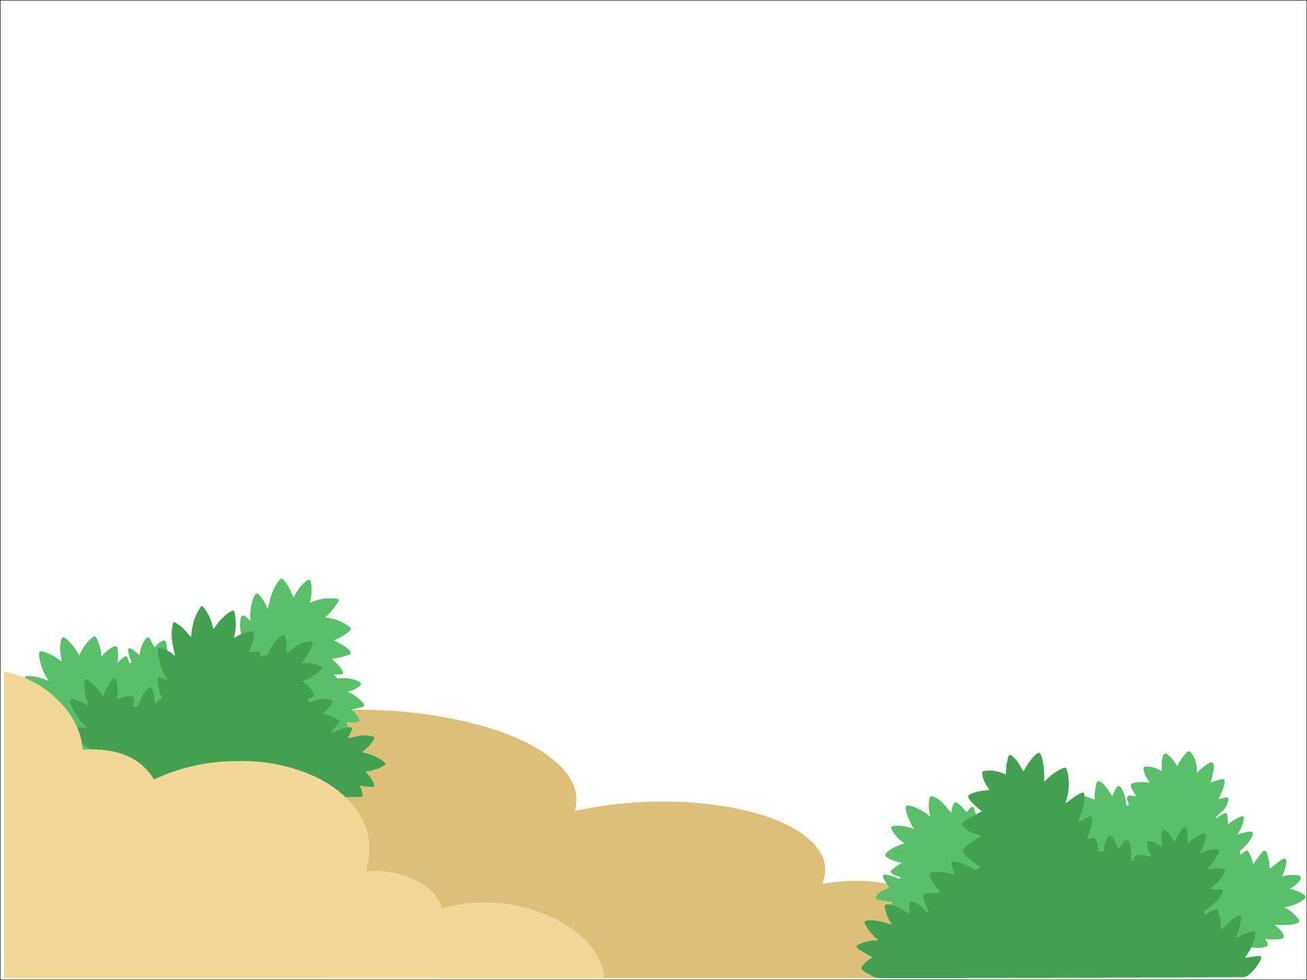 Bushes Grass Land Background Illustration vector